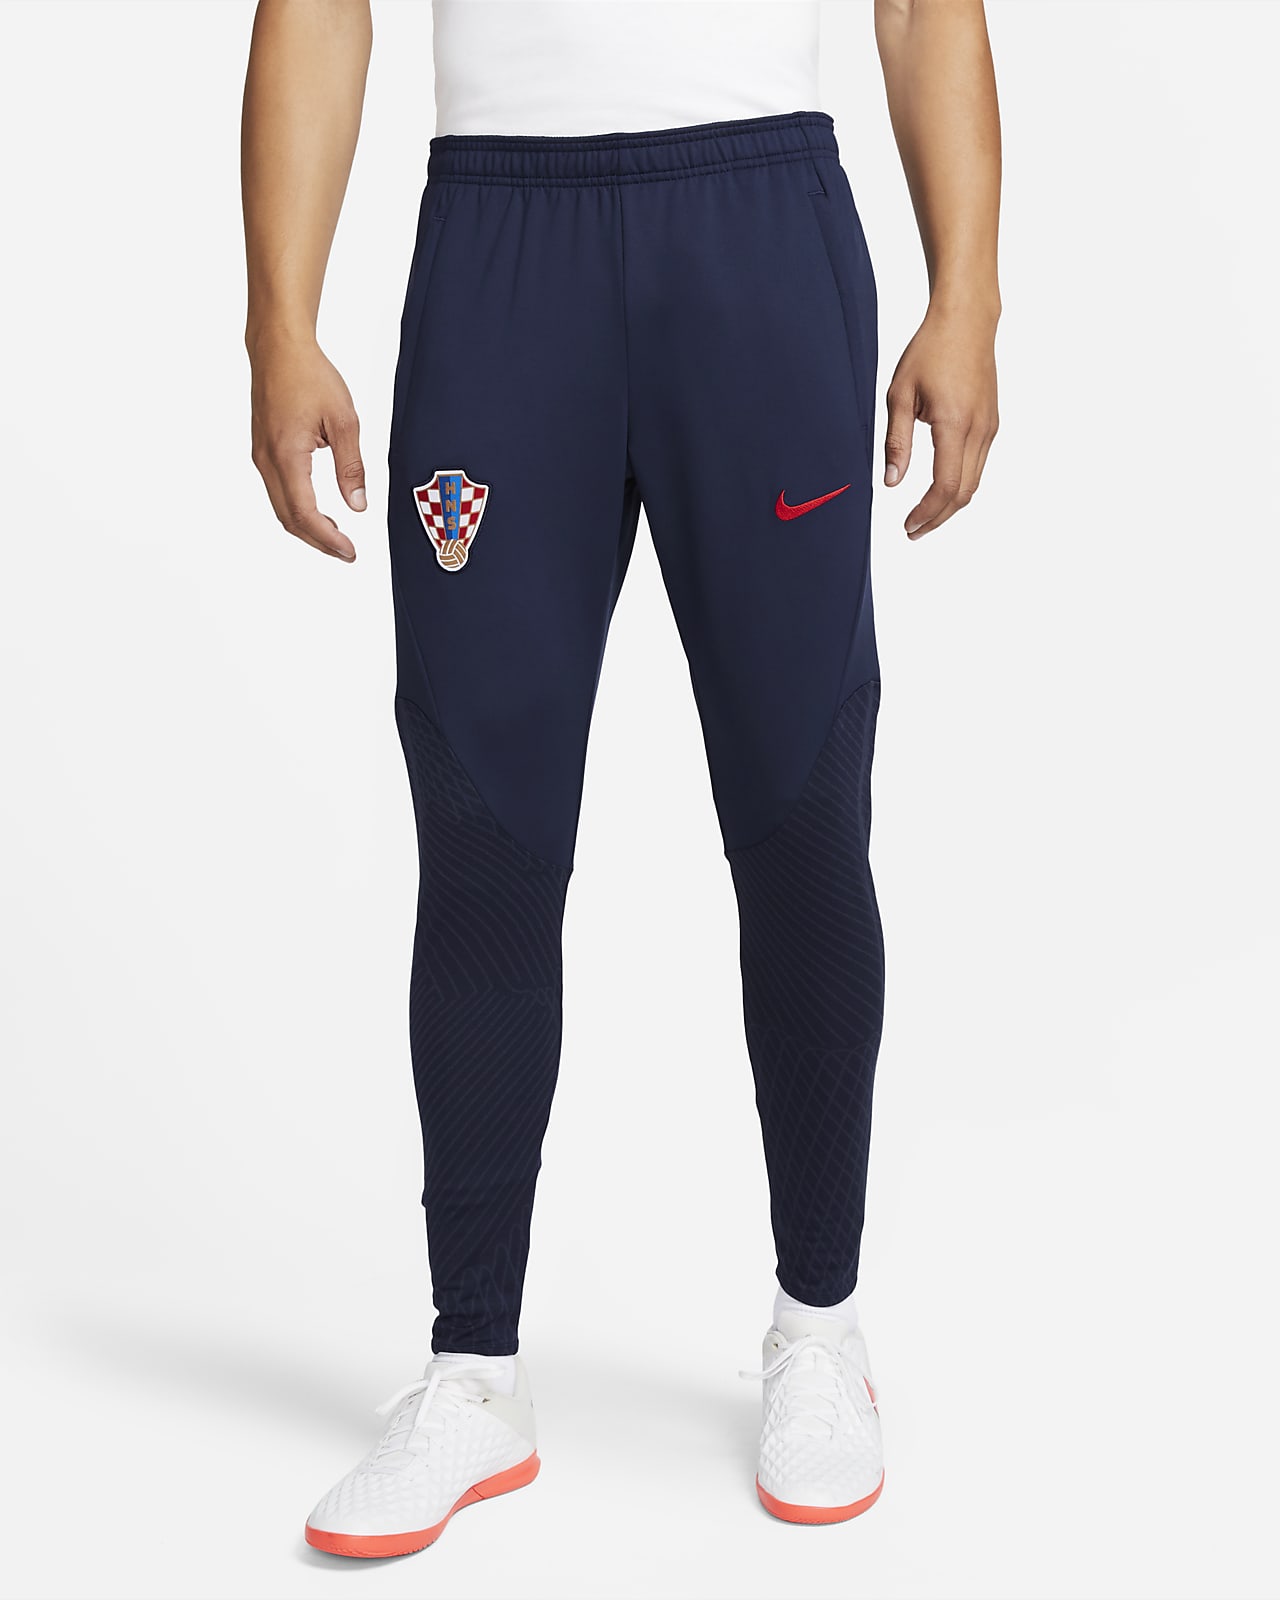 Croatia Men's Nike Dri-FIT Knit Nike.com